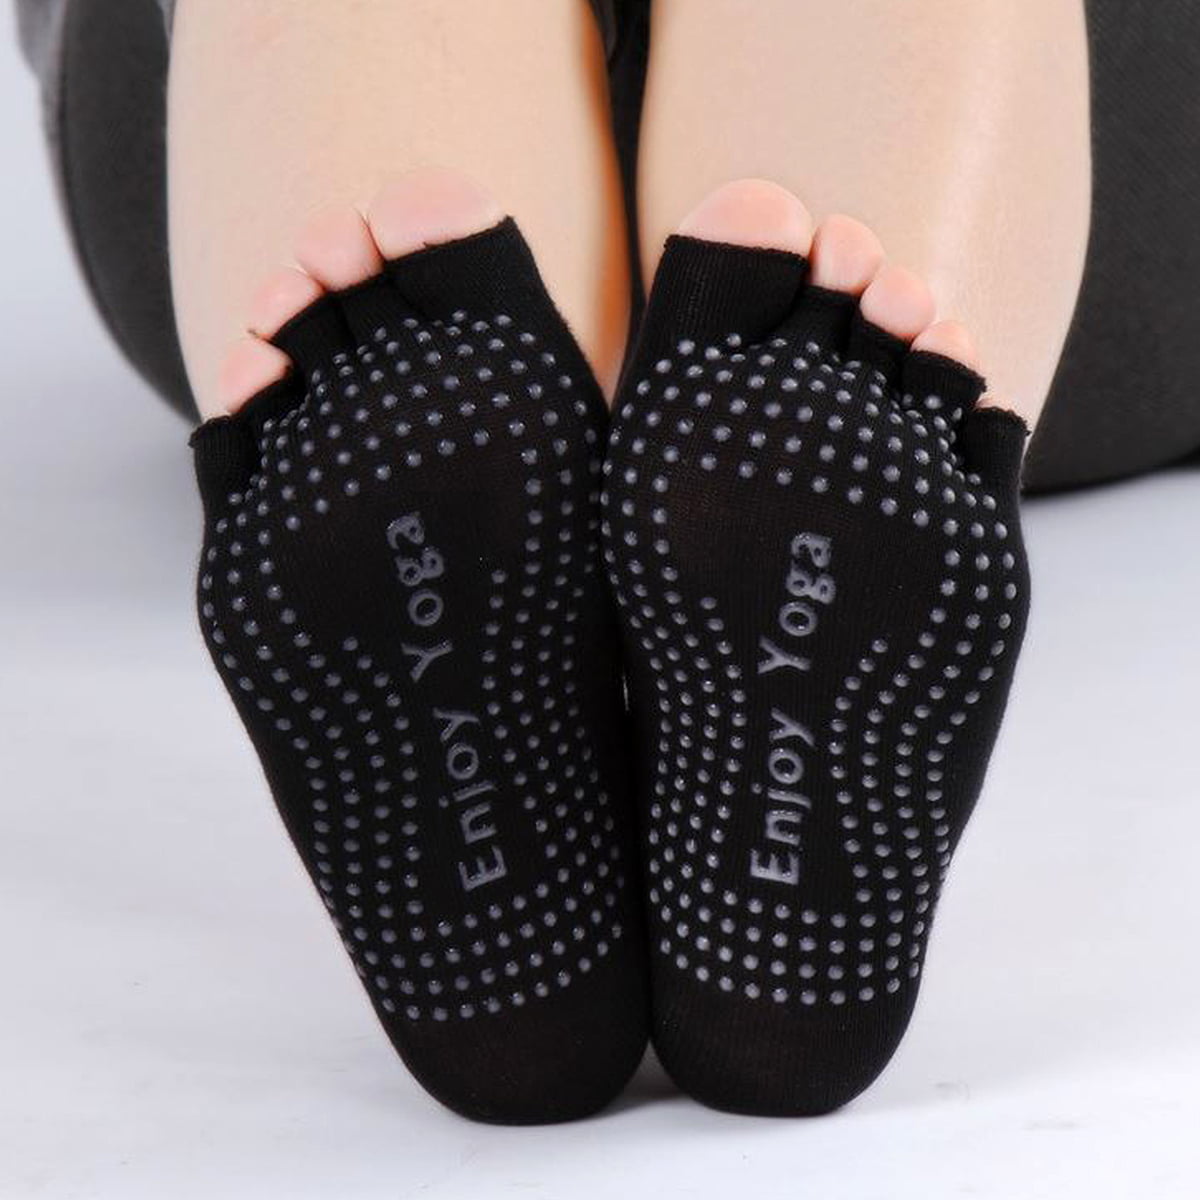 Women's Non-Slip Fitness Socks 500 - Grey DOMYOS